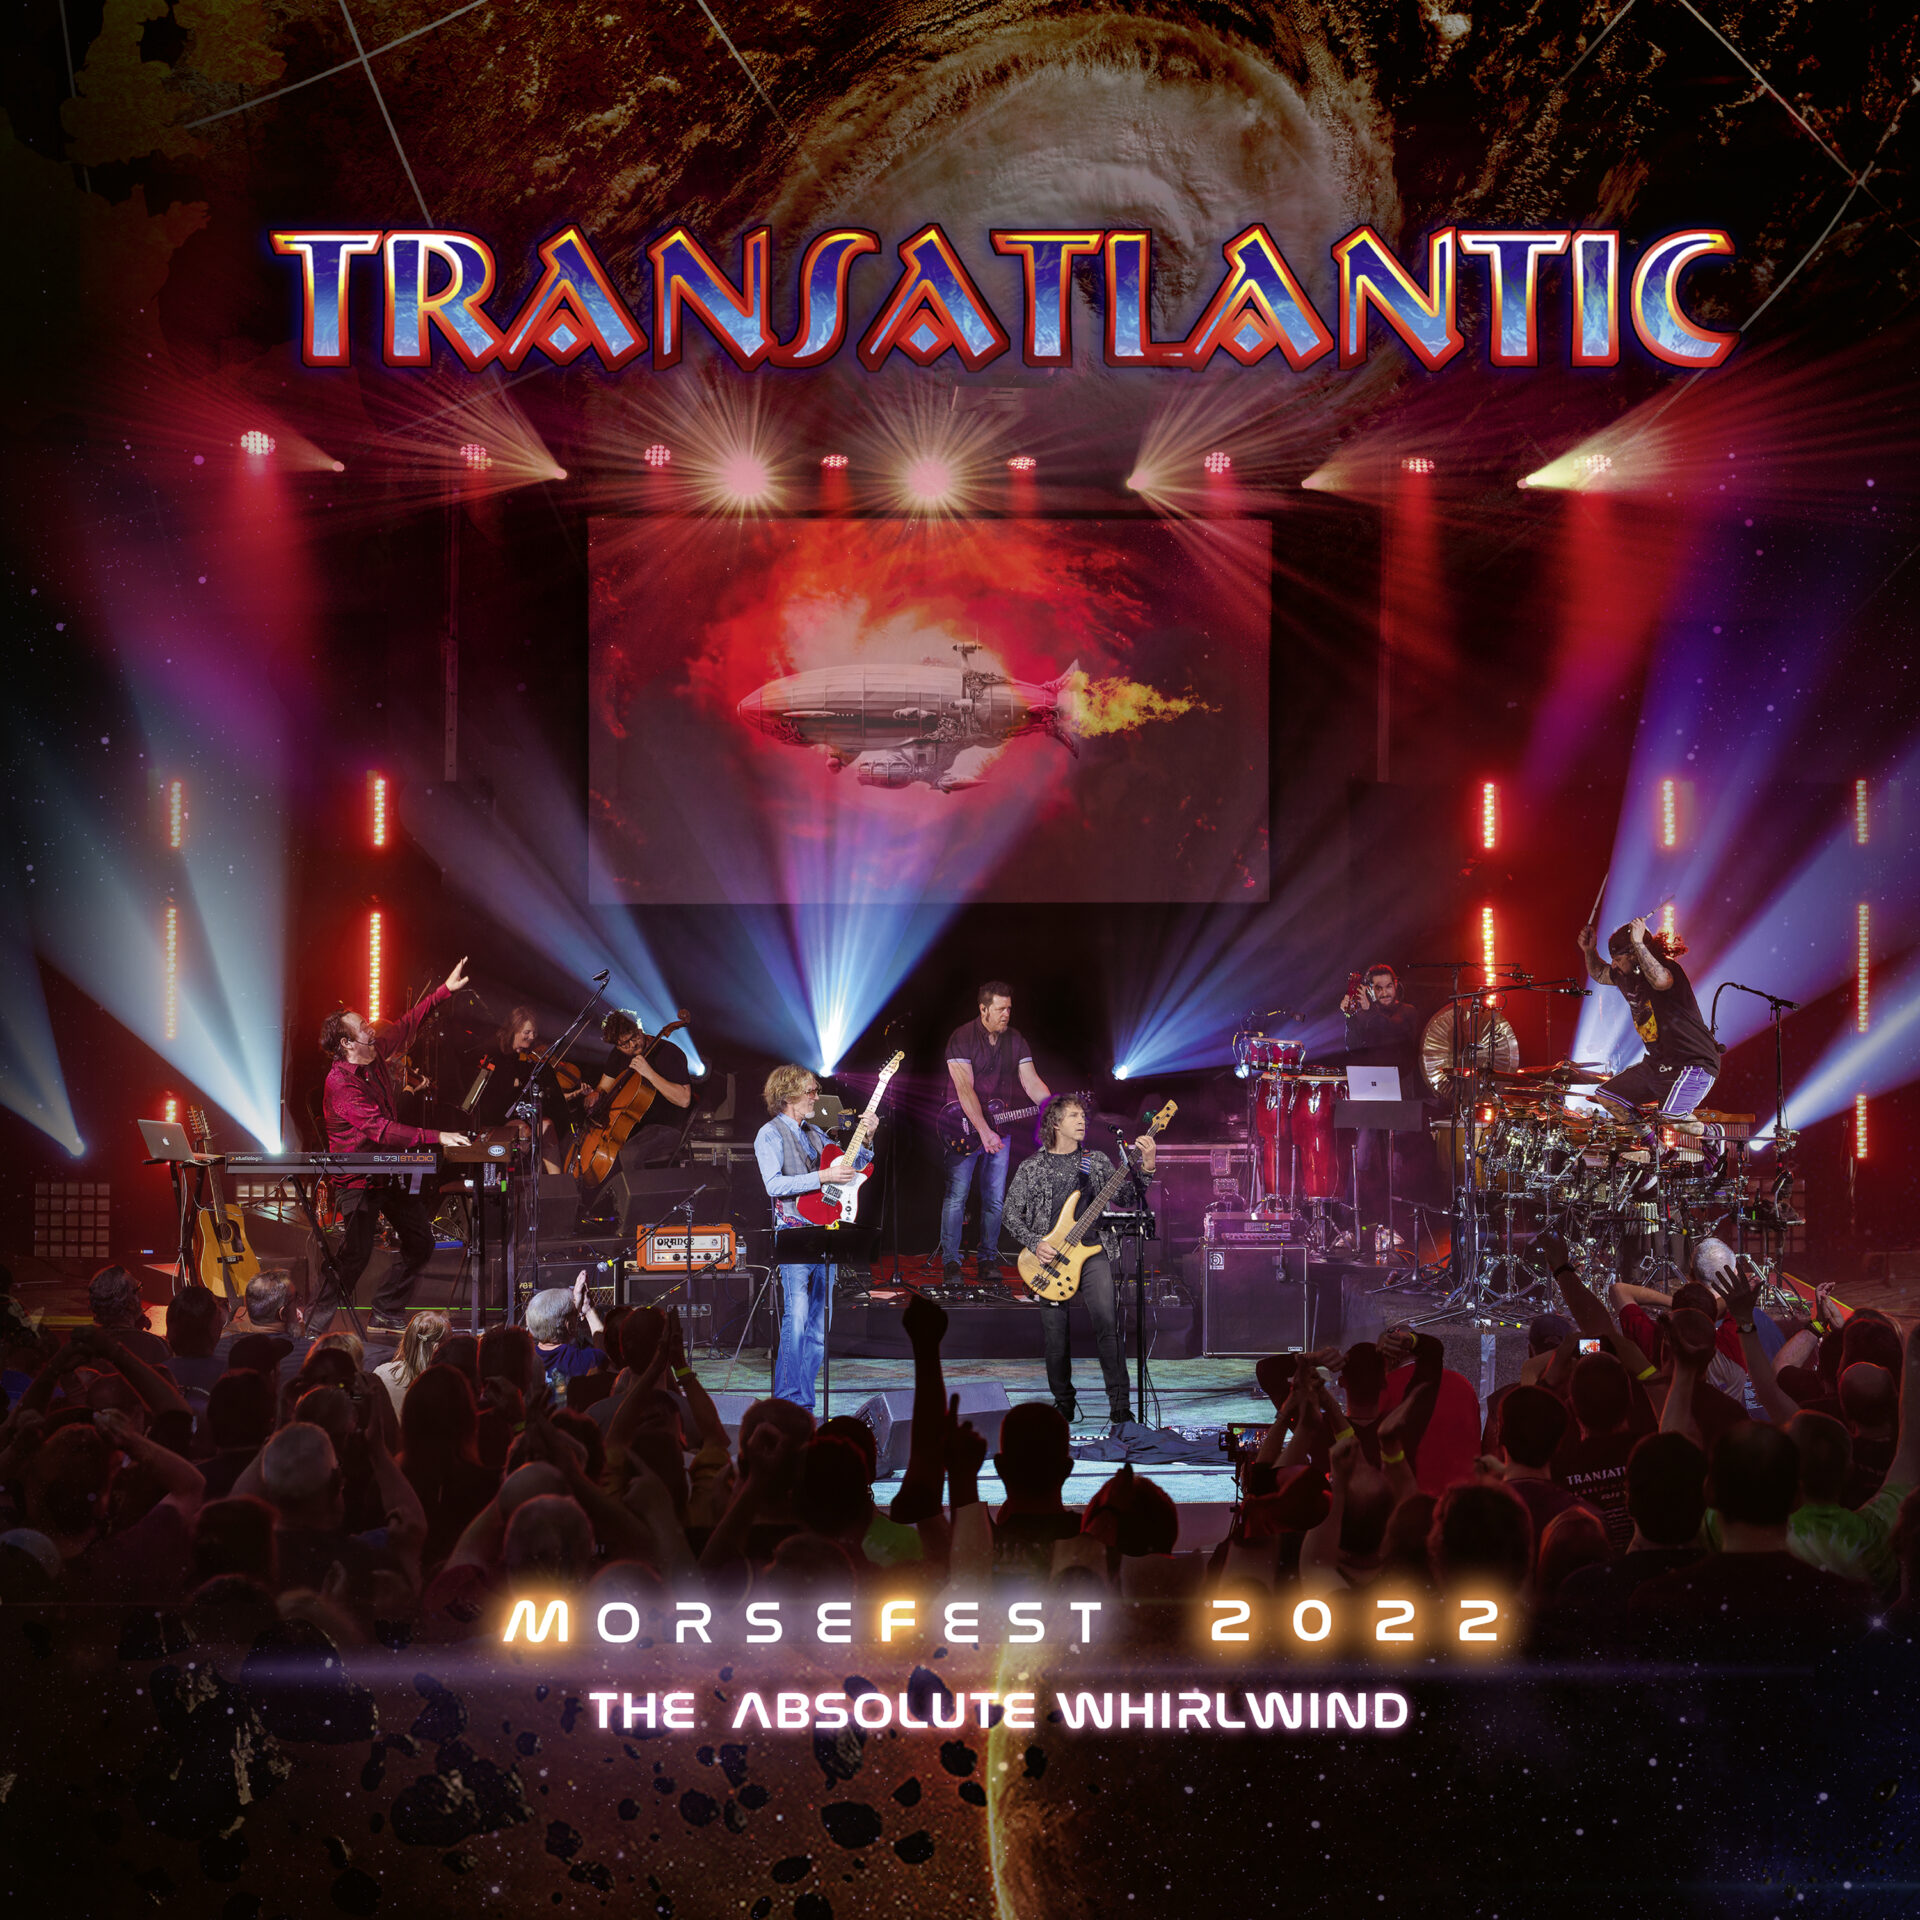 Transatlantic – Live at Morsefest 2022: The Abosolute Whirlwind